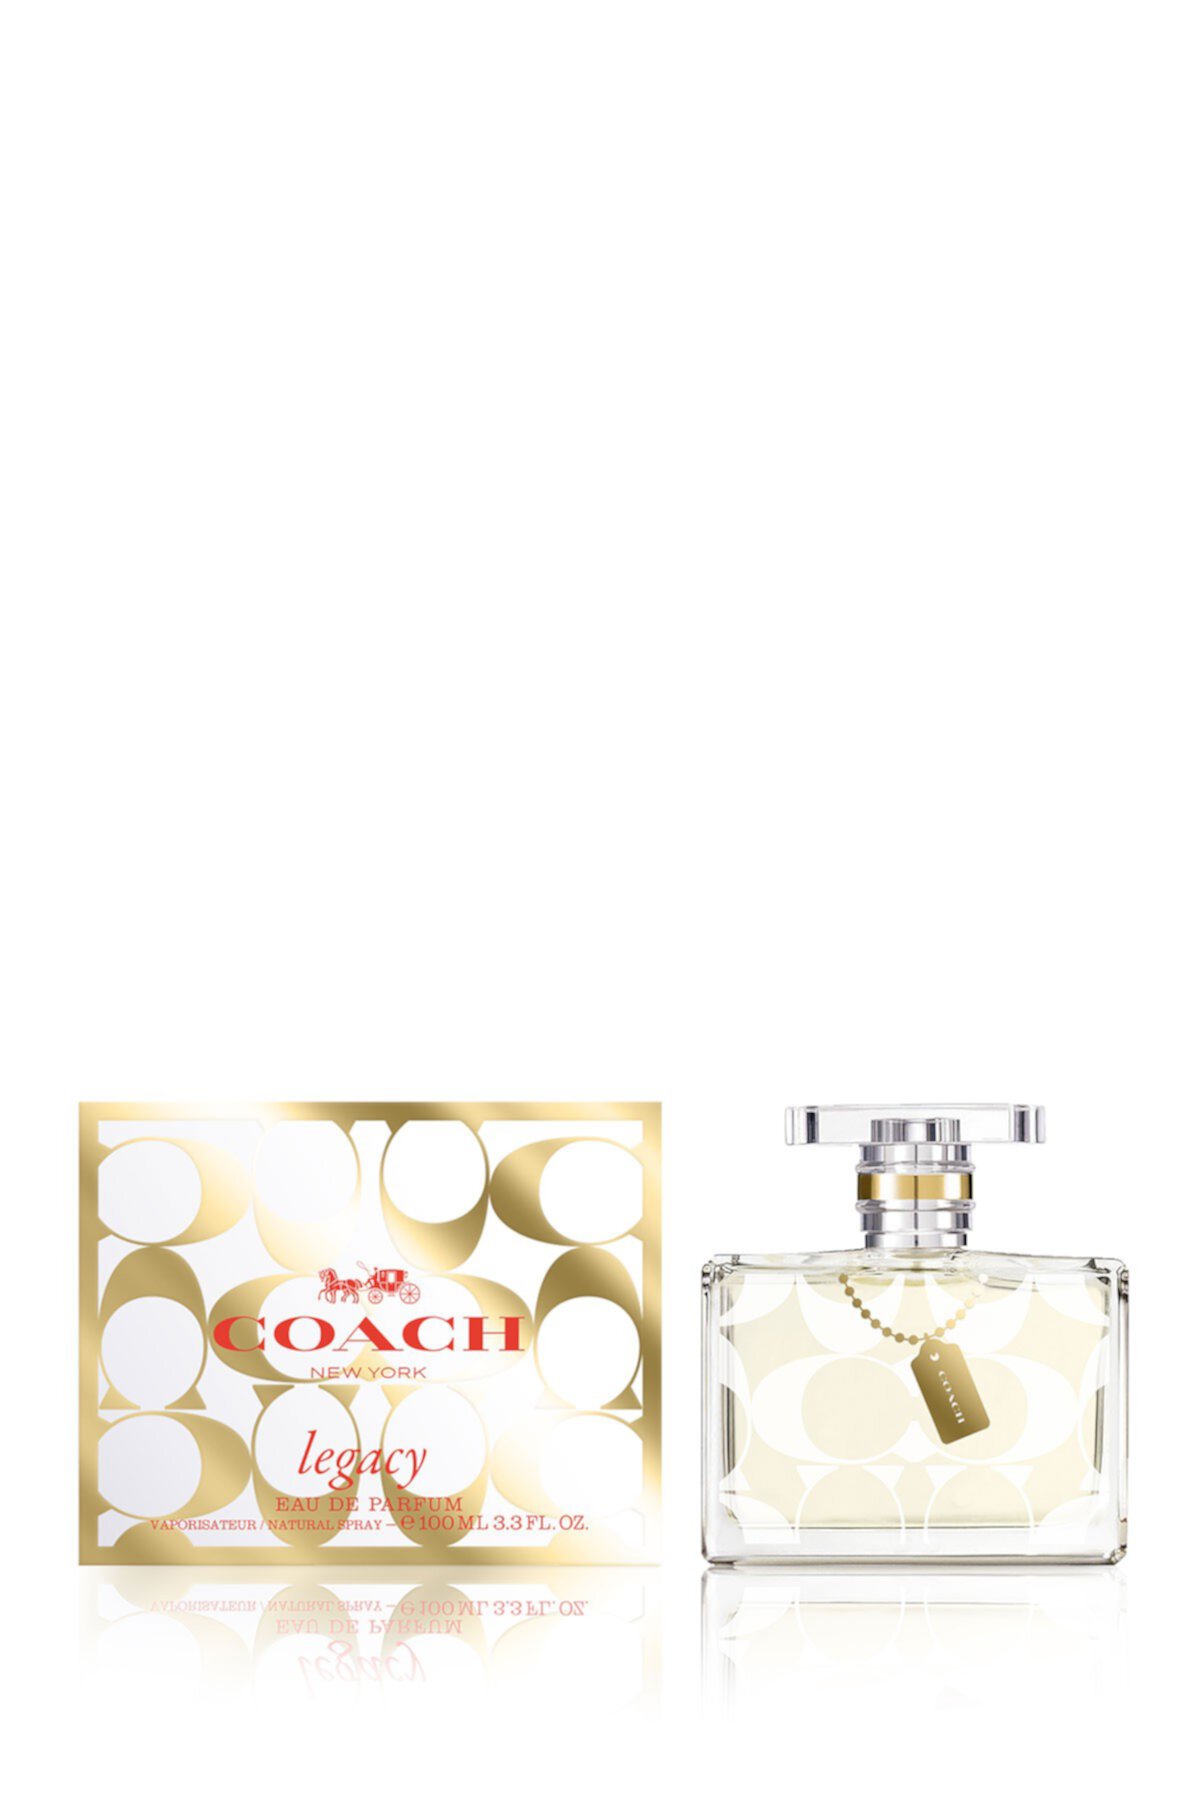 Coach Legacy Eau de Parfum - 3,0 эт. унция $ 12.99 COACH